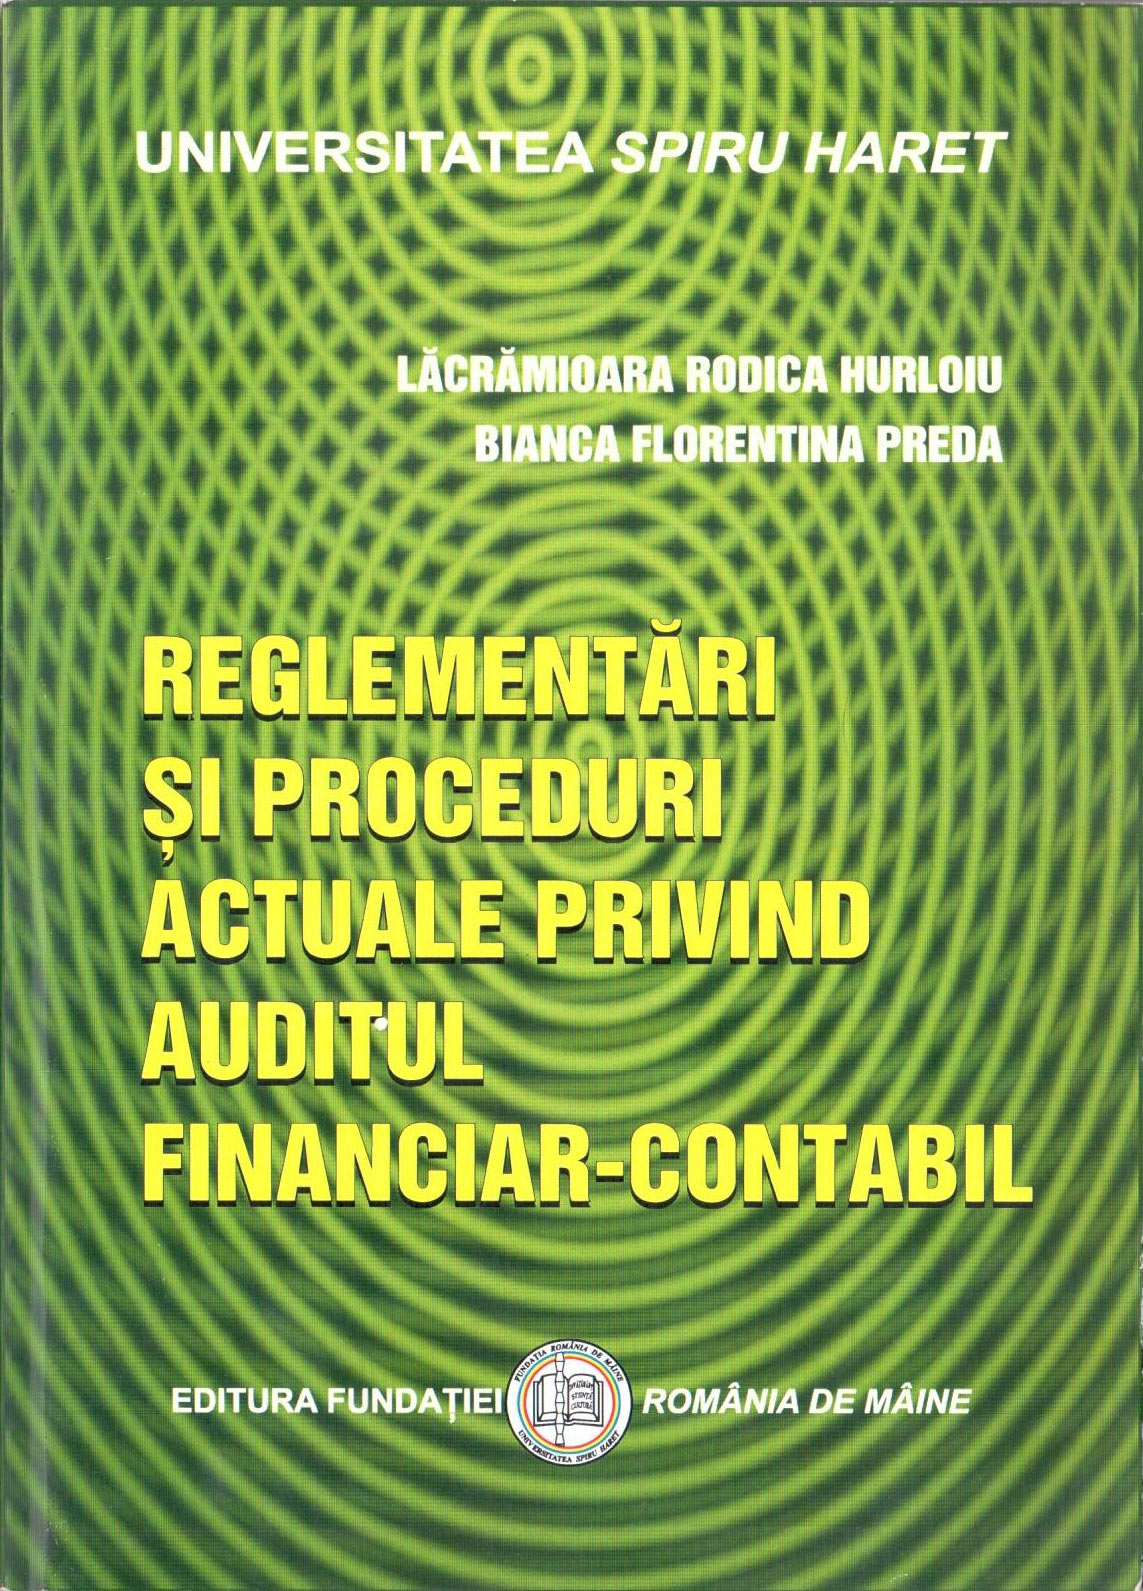 Reglementari si proceduri actuale privind auditul financiar contabil | Lacramioara Rodica Hurloiu, Bianca Florentina Preda